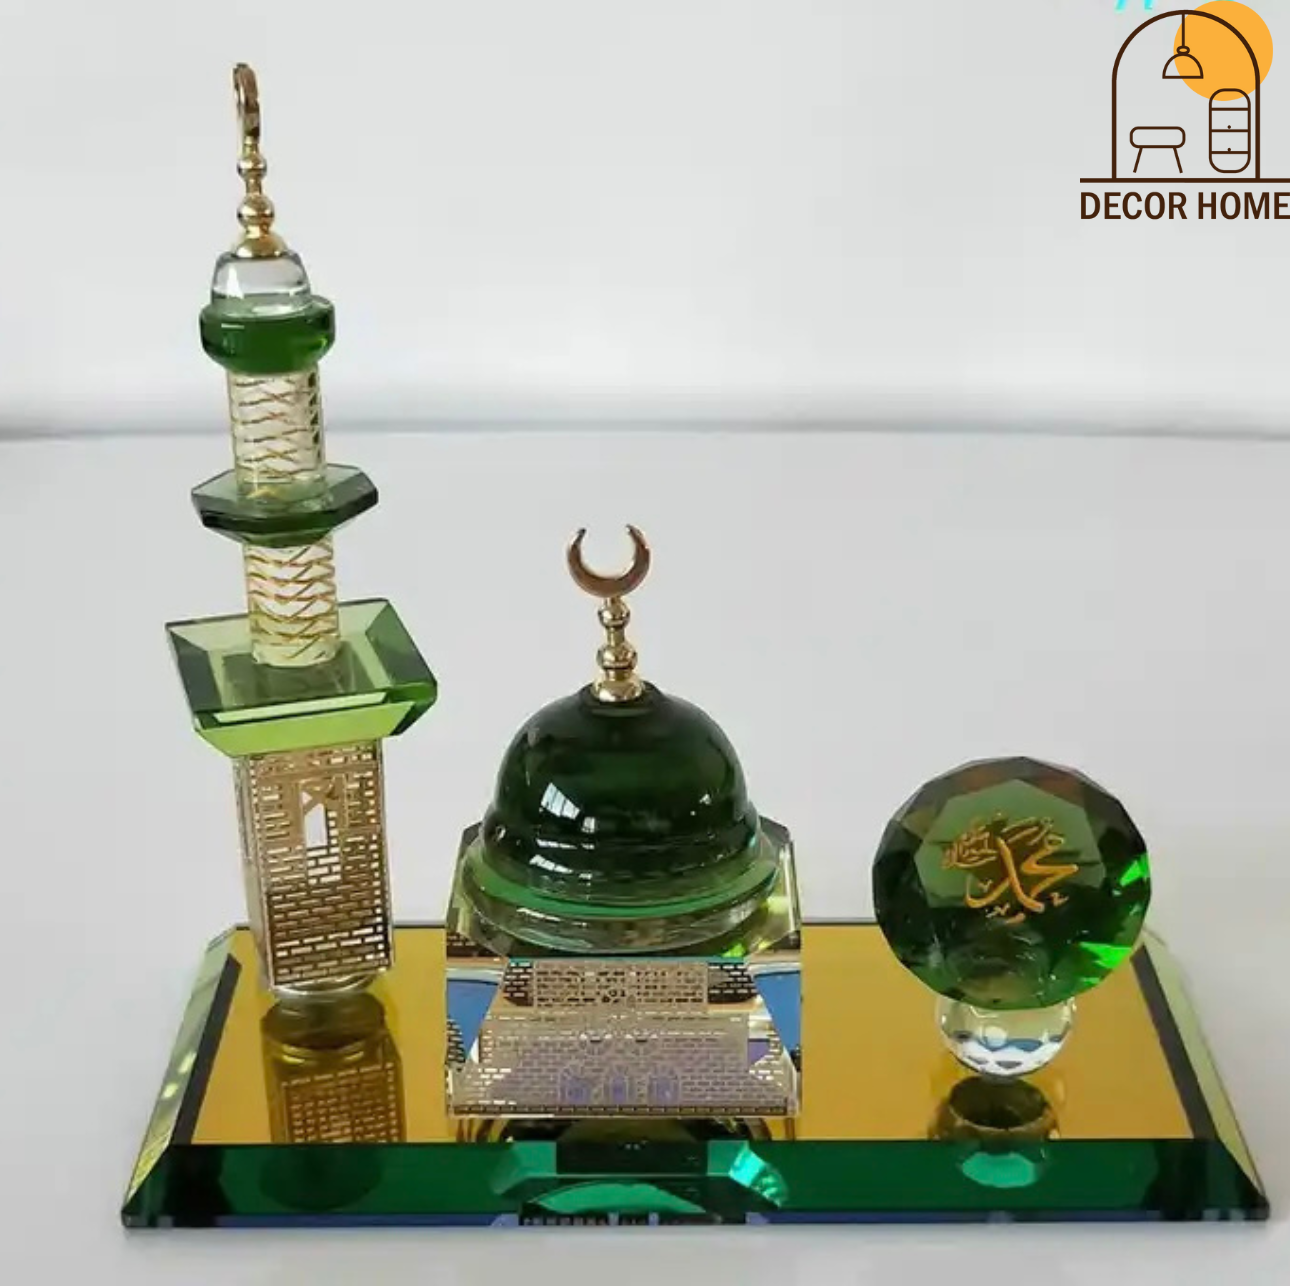 Crystal Madina Mosque Model